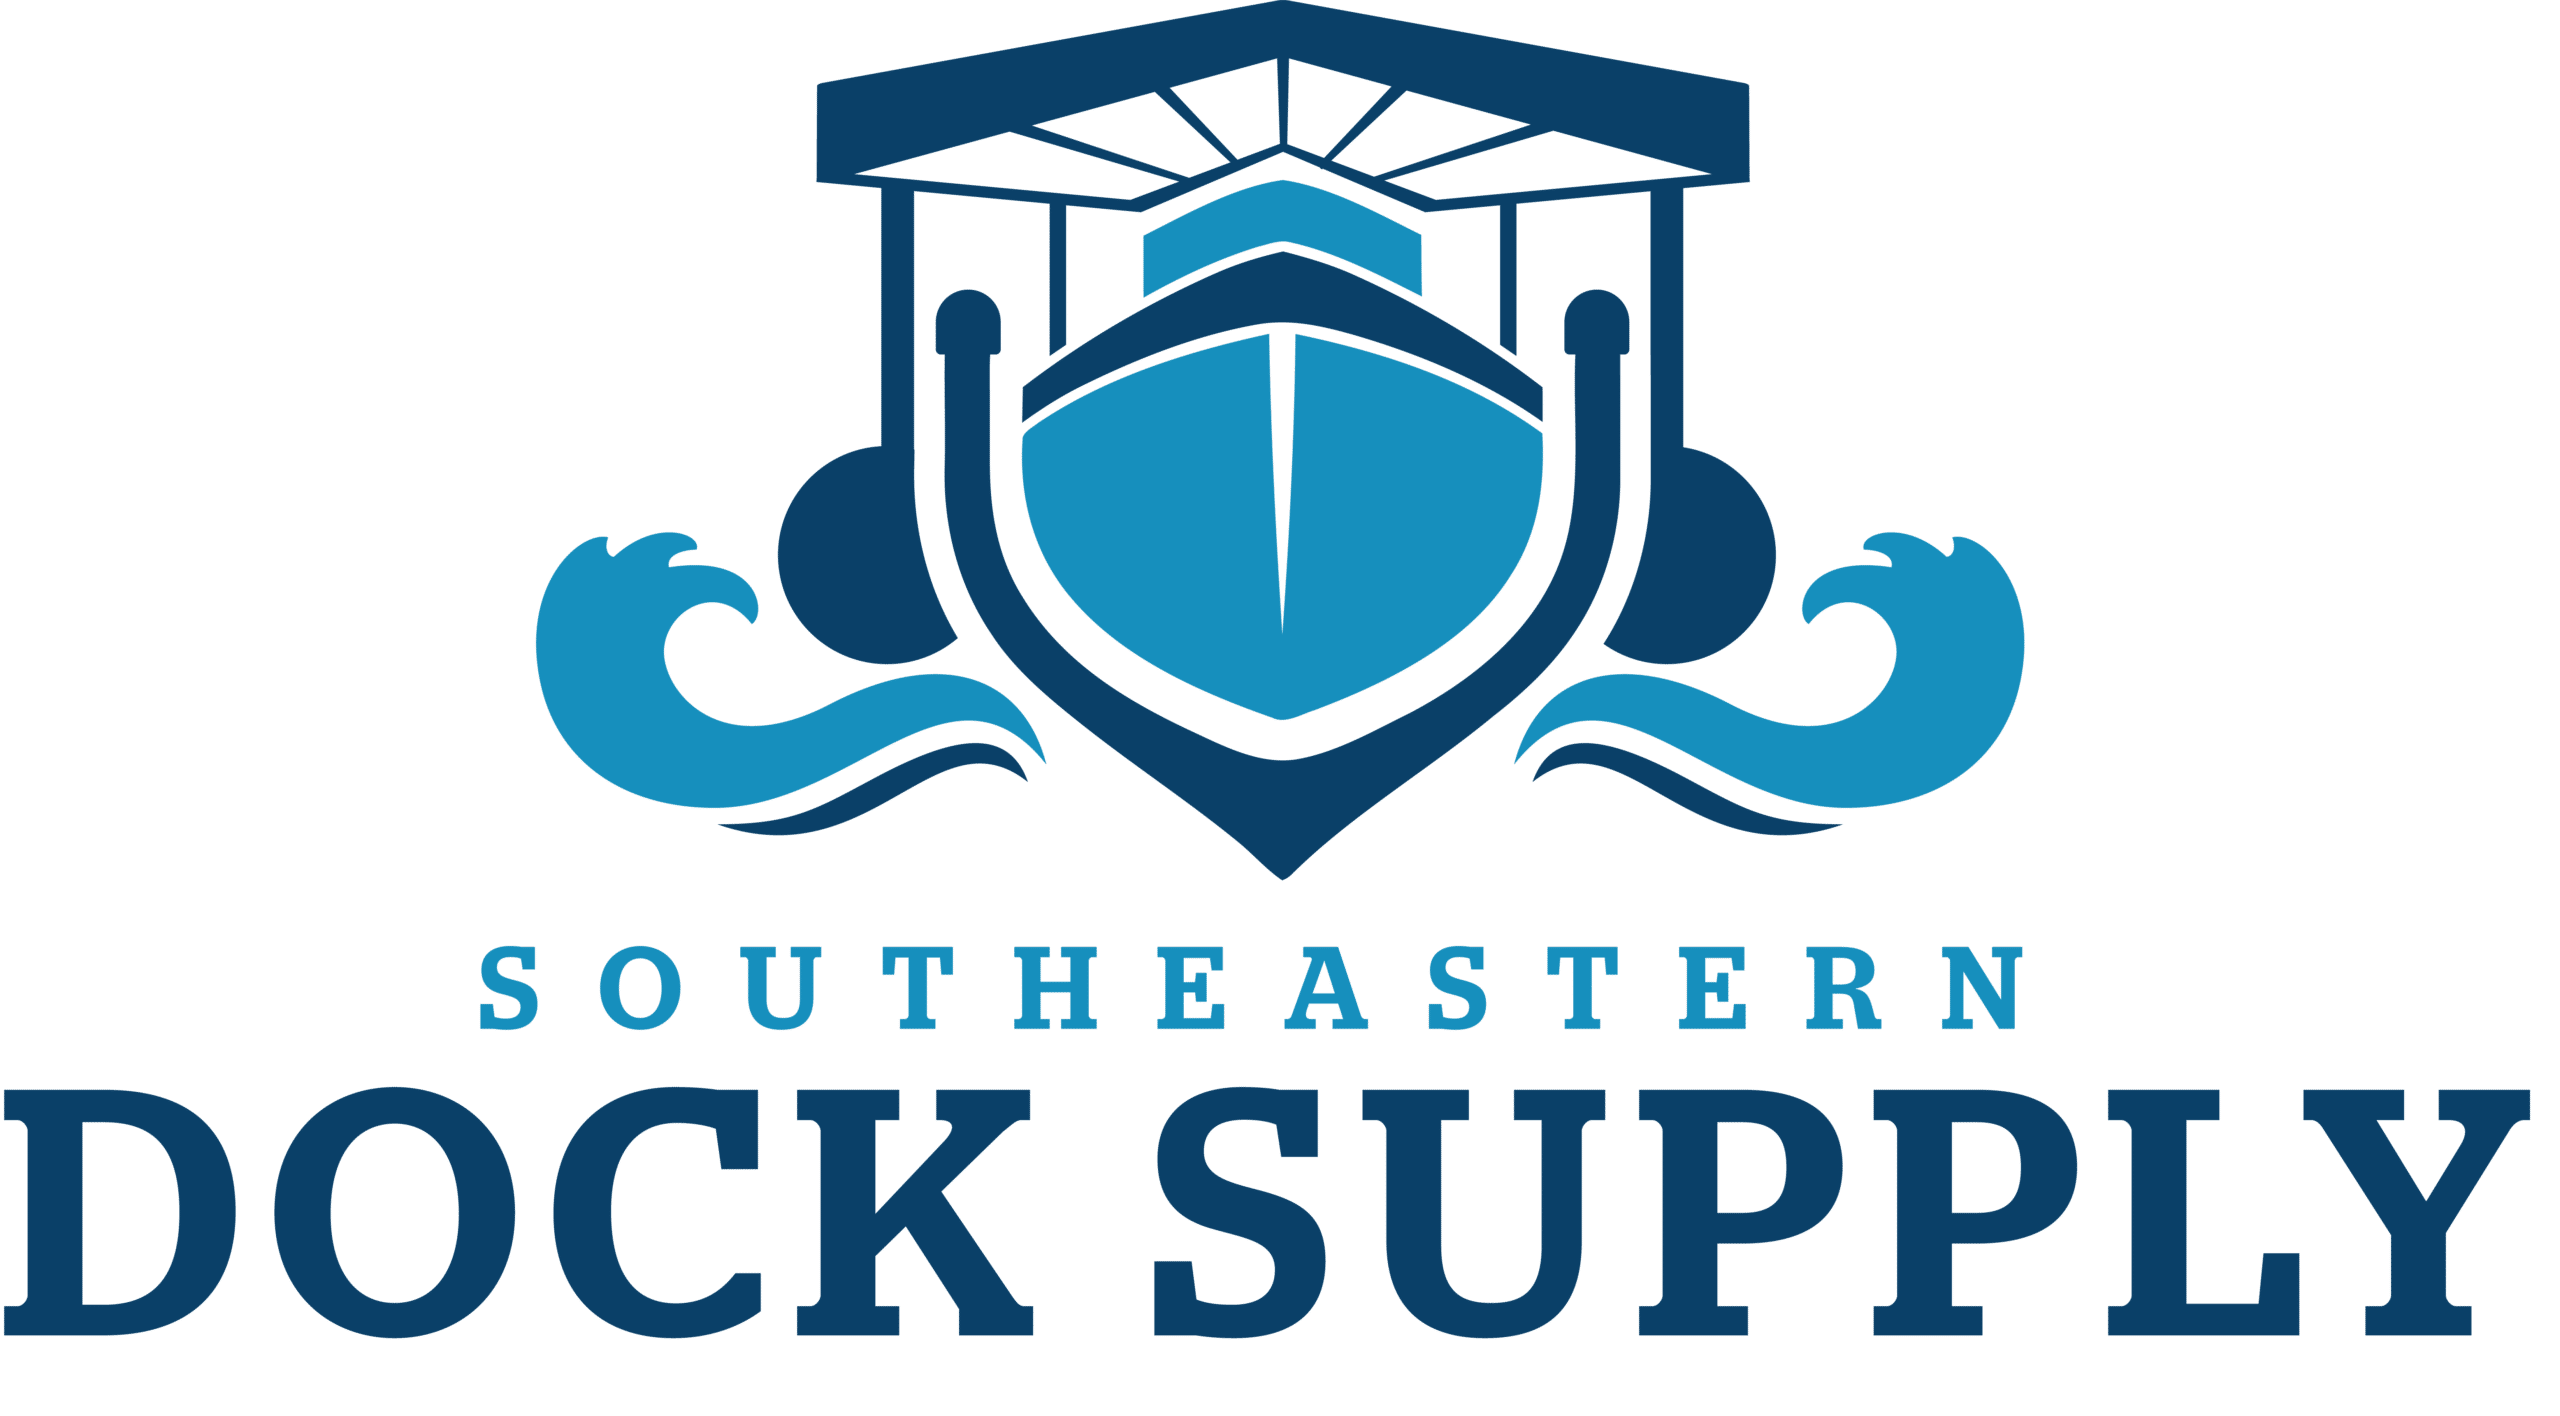 Southeastern Dock Supply